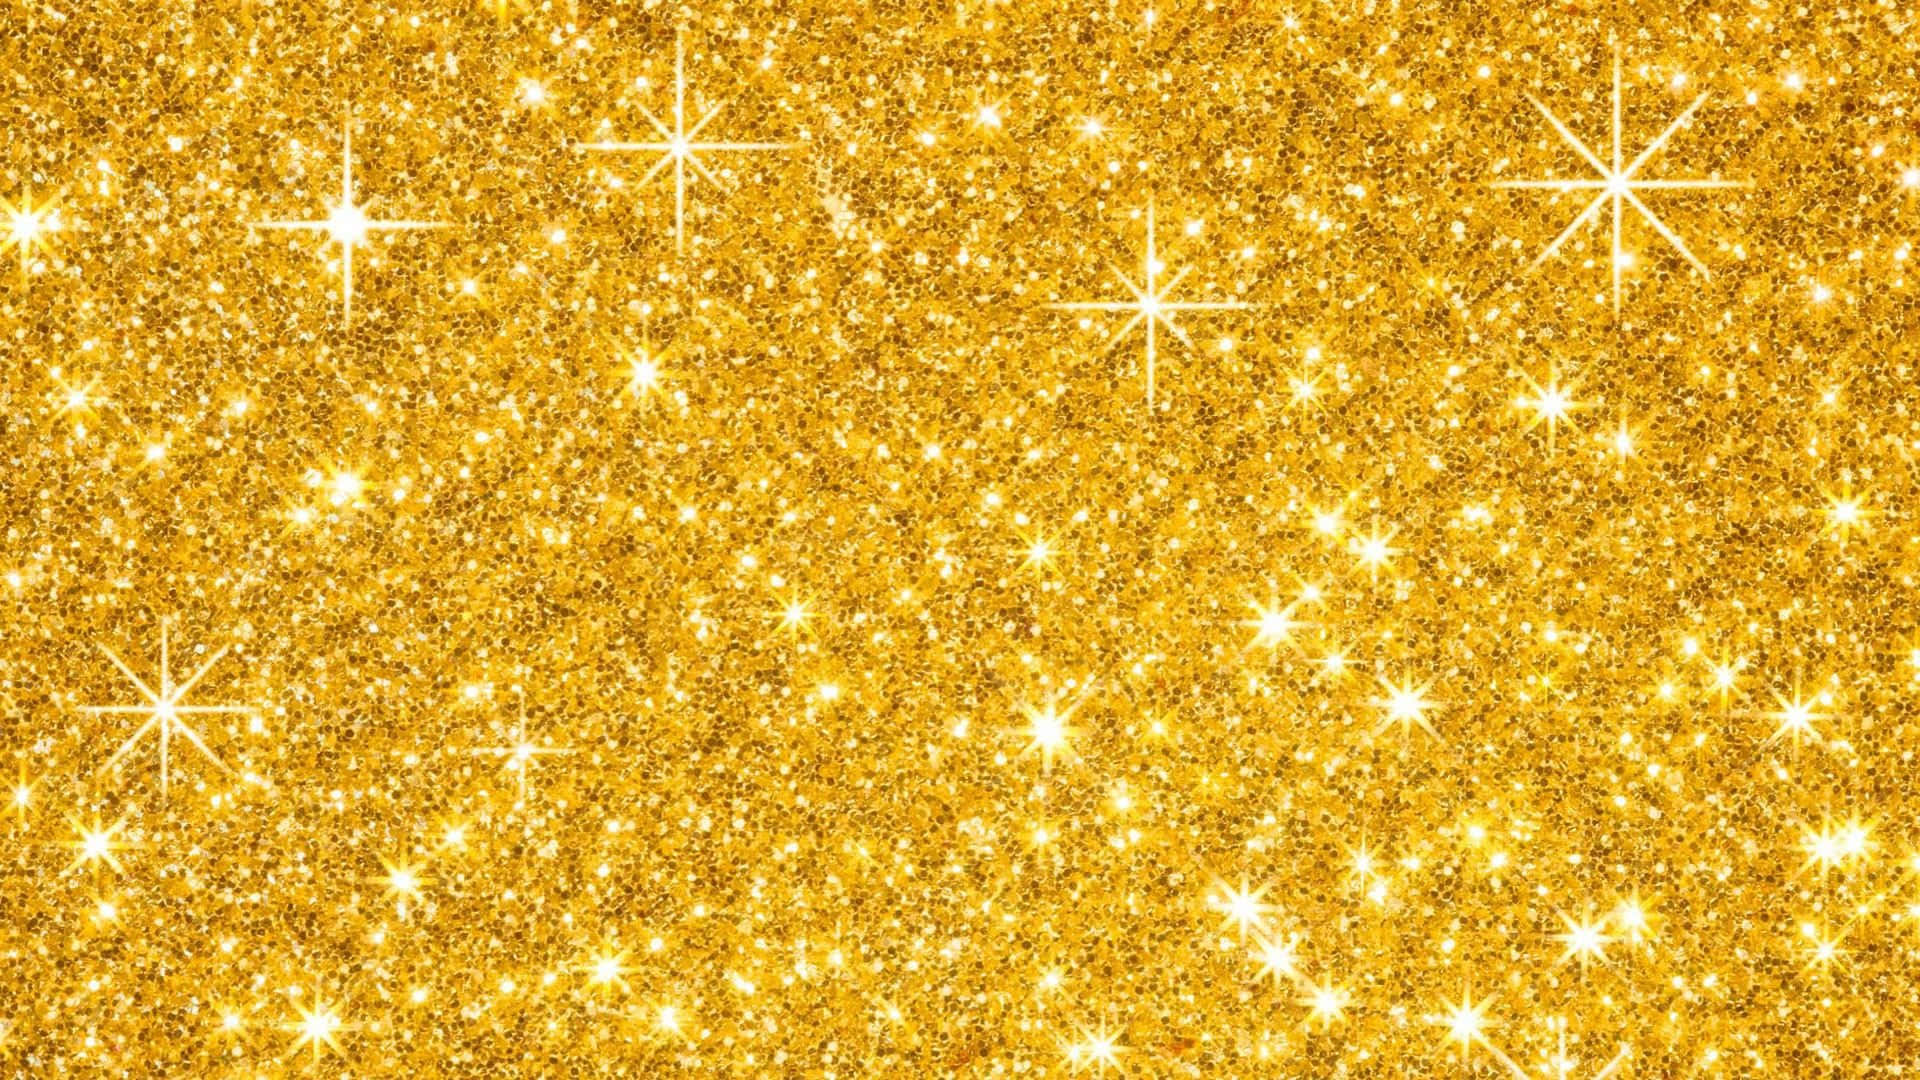 Captivating sparkle of Gold Glitter